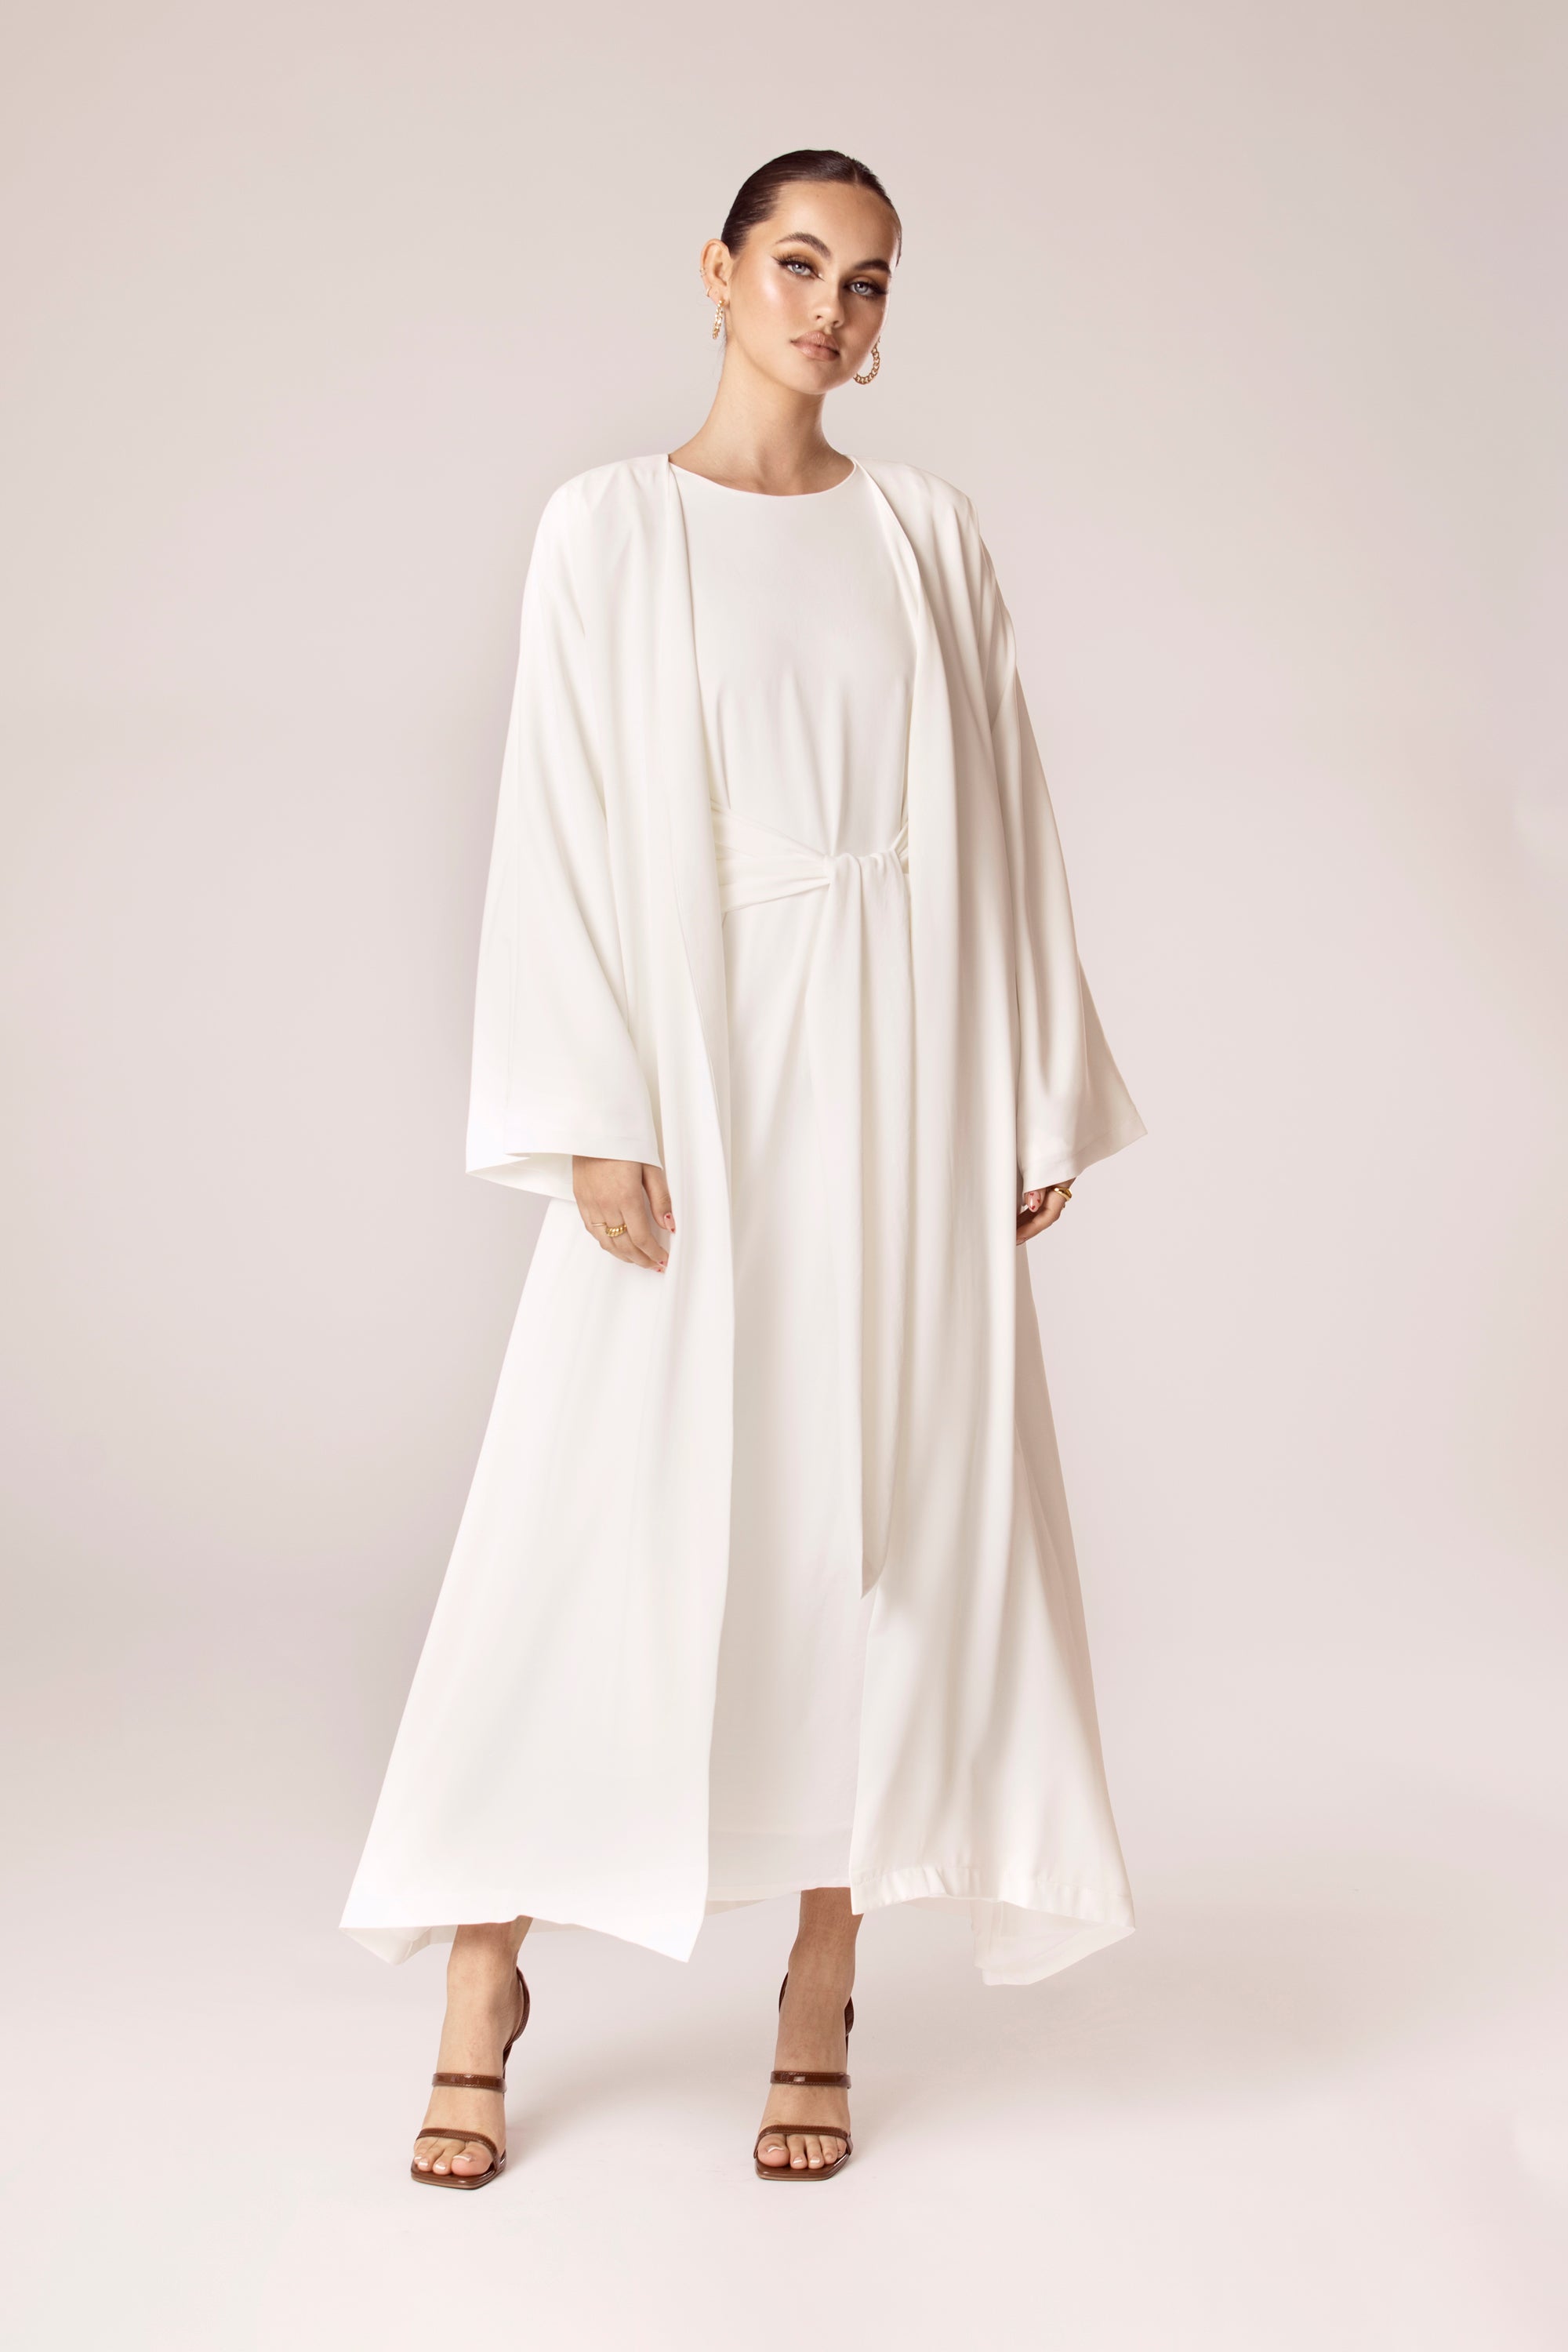 Isabella Open Abaya - White Veiled Collection 